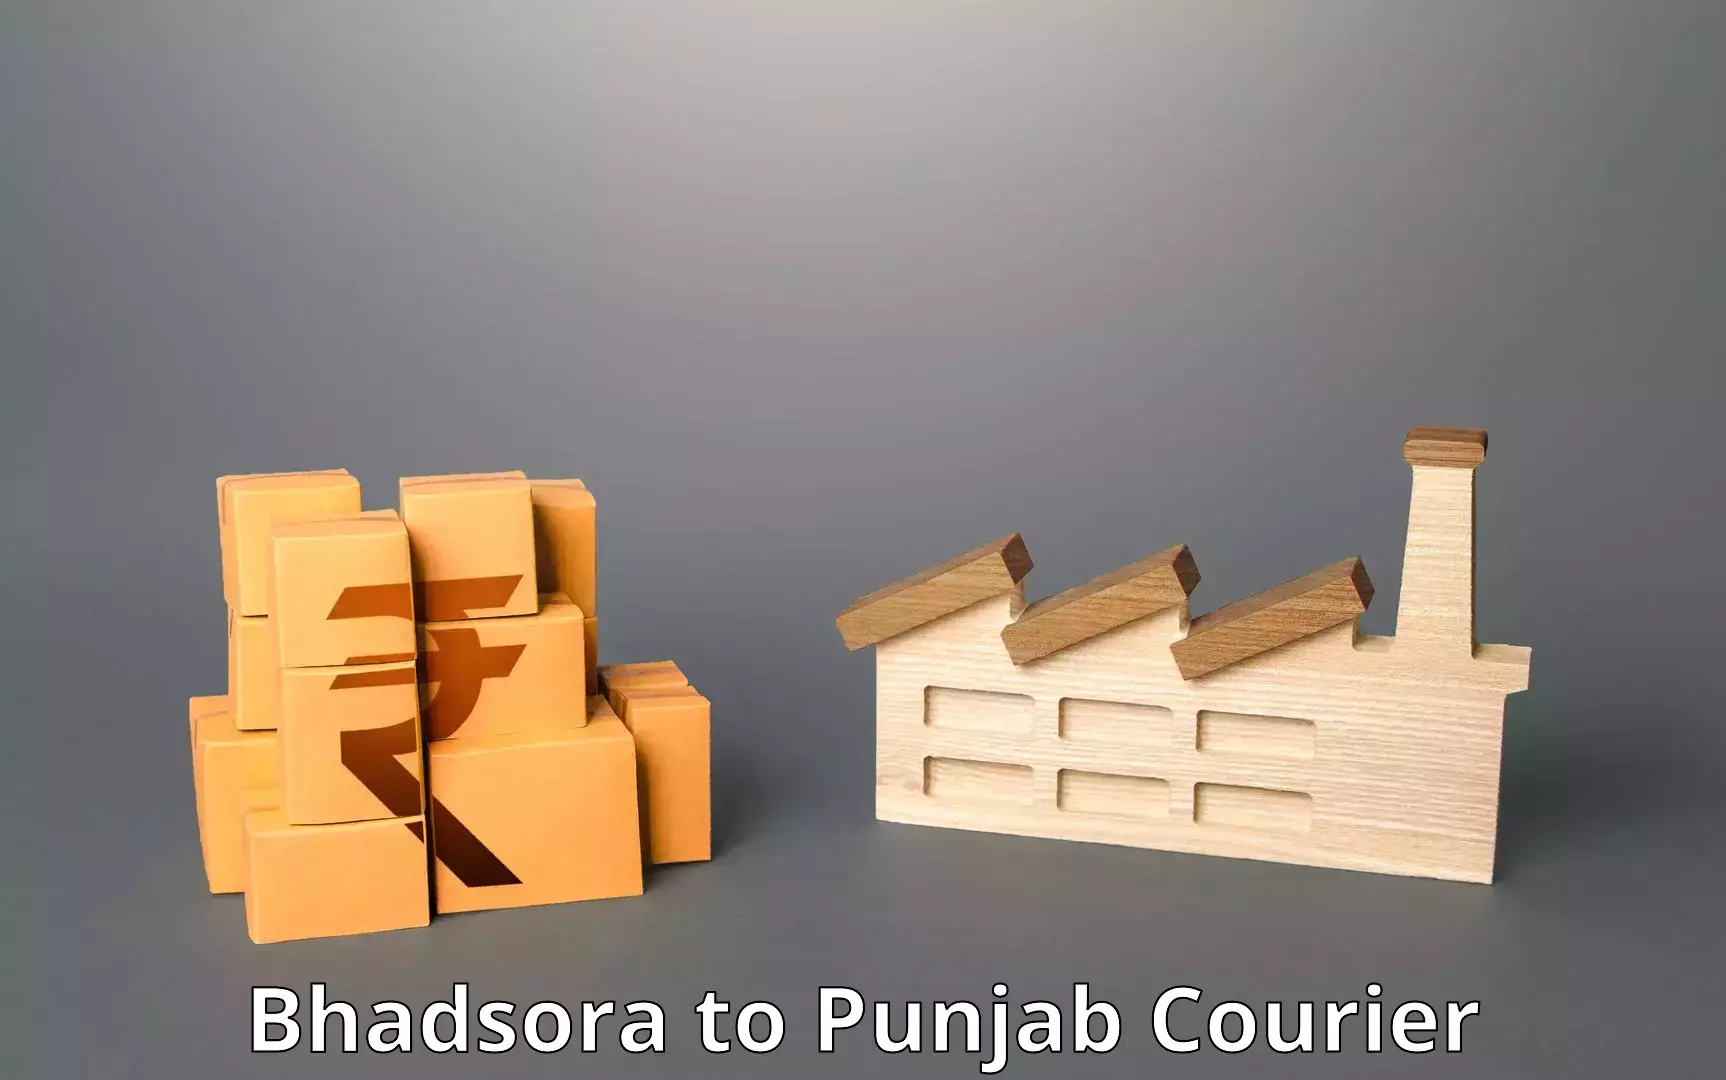 High-speed parcel service Bhadsora to Ludhiana